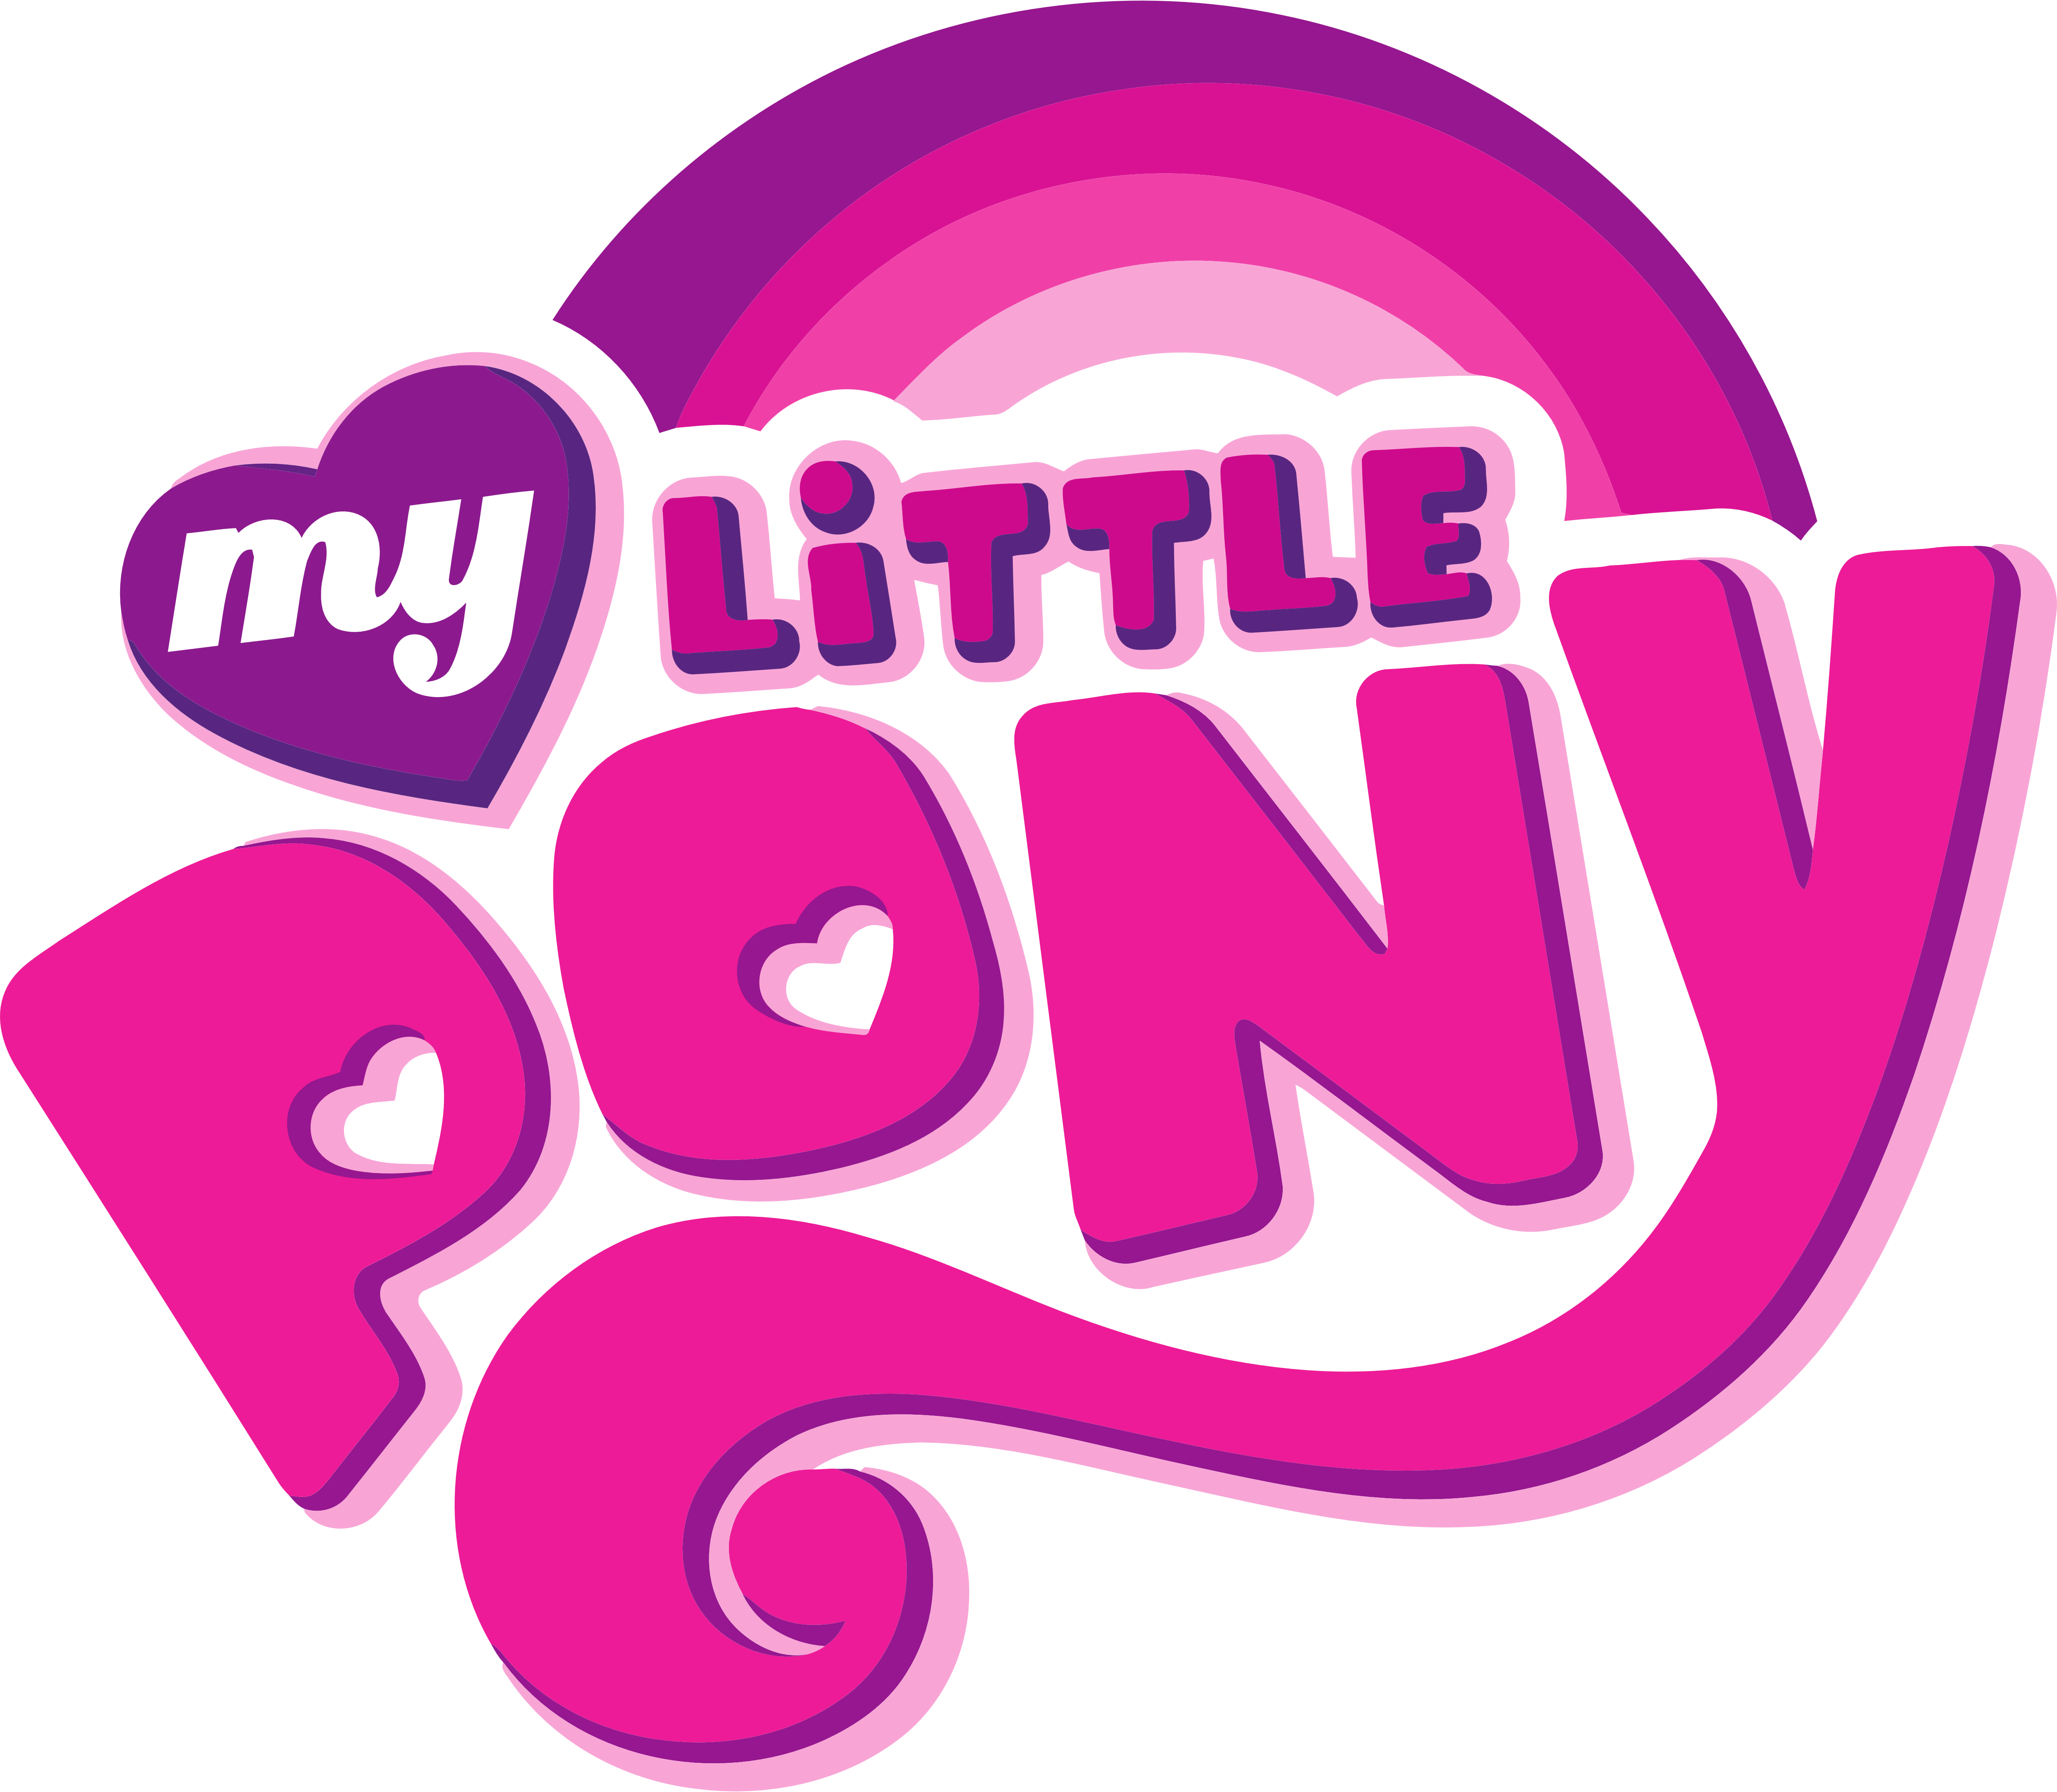 My Little Pony Logo Significado Del Logotipo, Png, Vector | vlr.eng.br